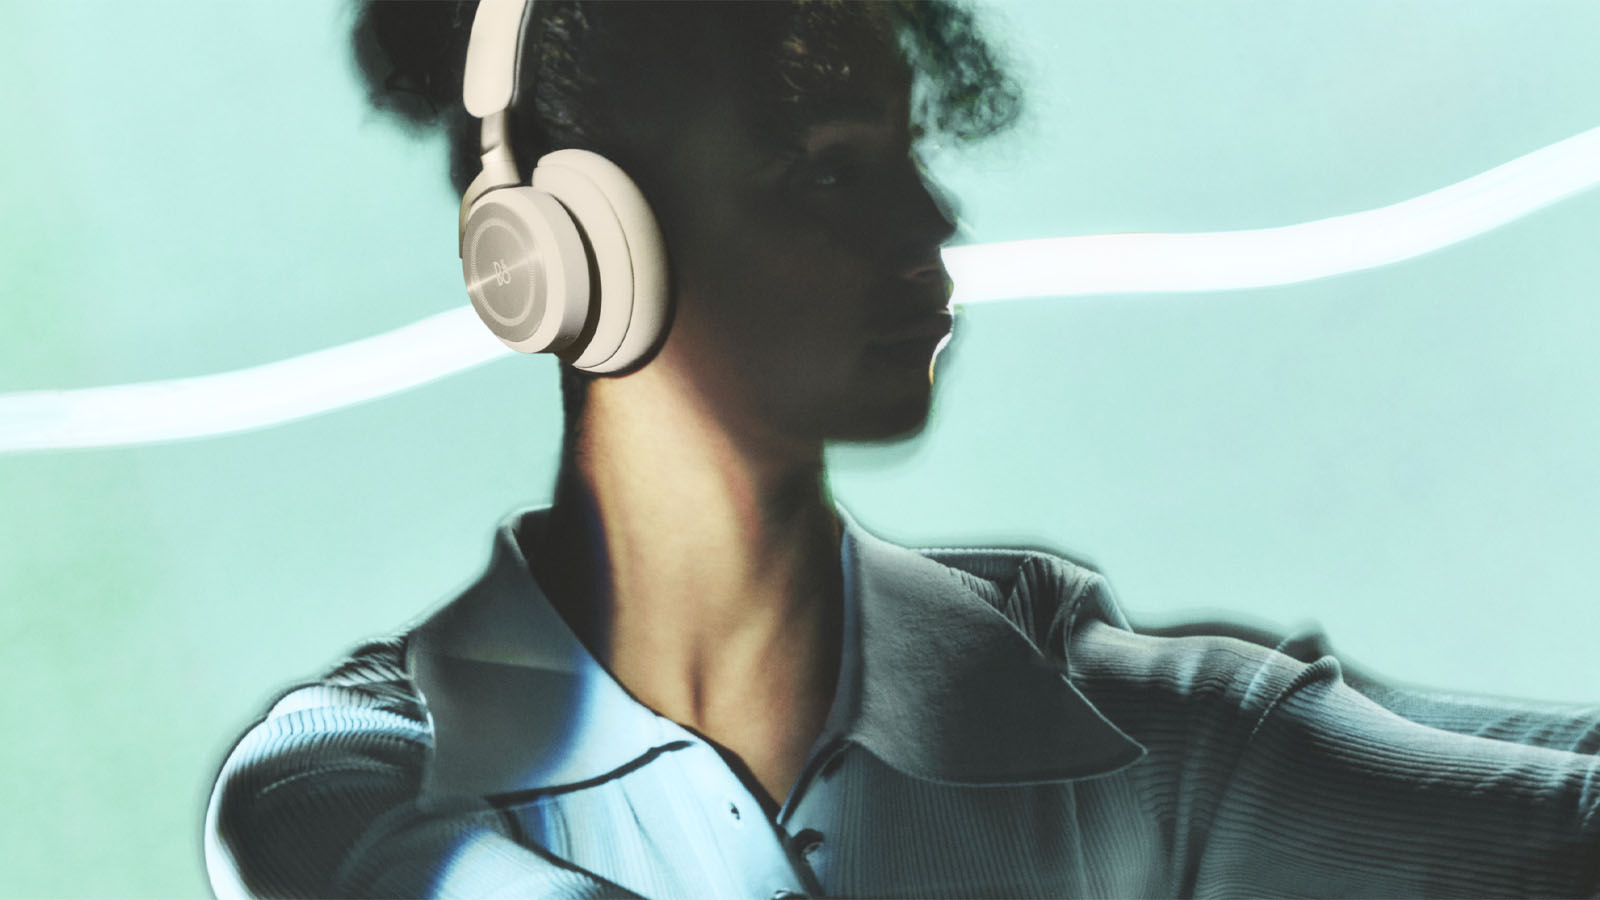 Beoplay HX – Comfortable ANC headphones